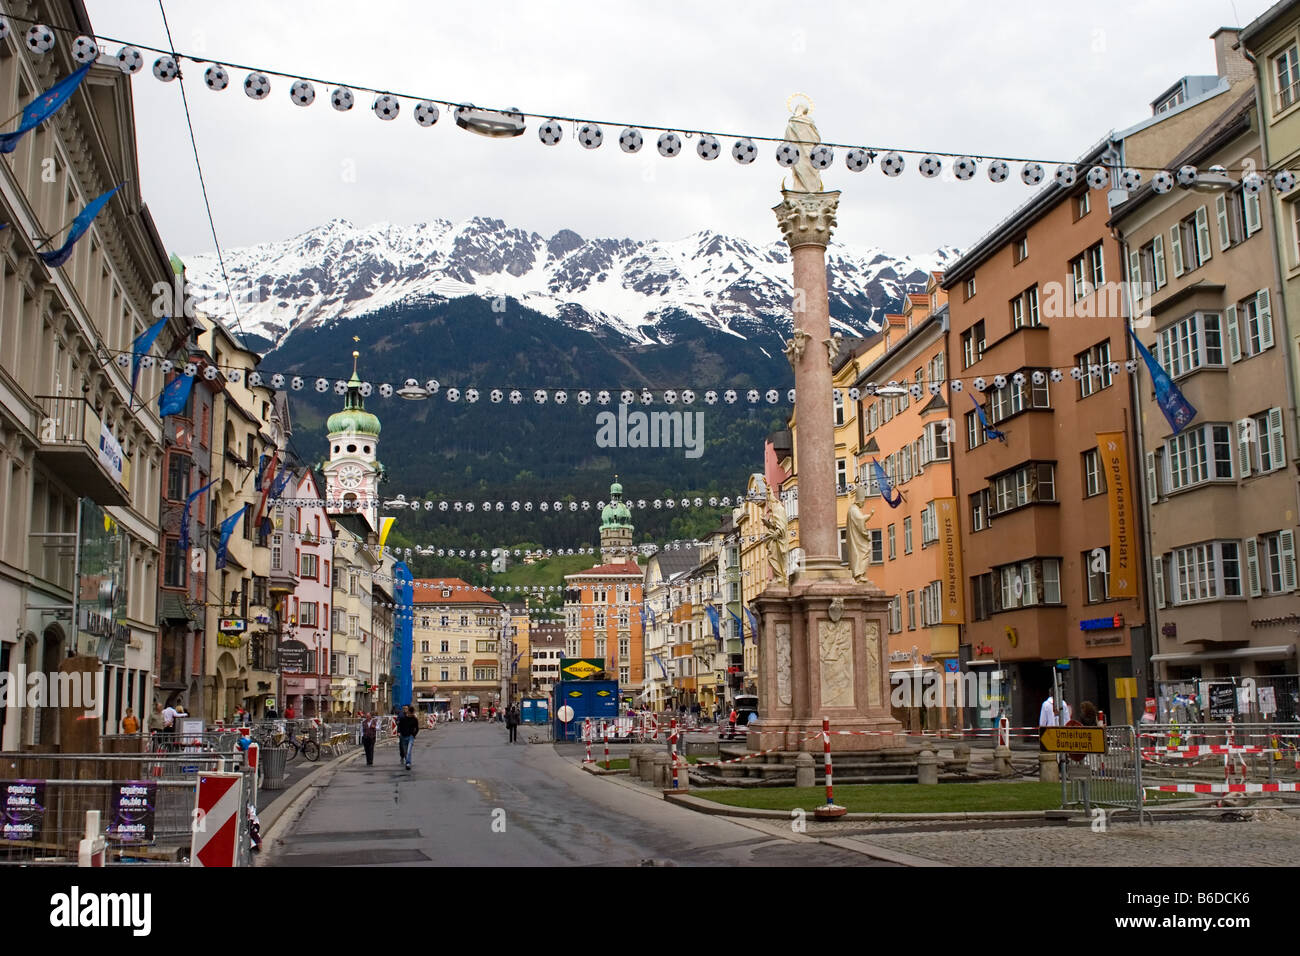 Innsbruck city centre during football celebrations Stock Photo